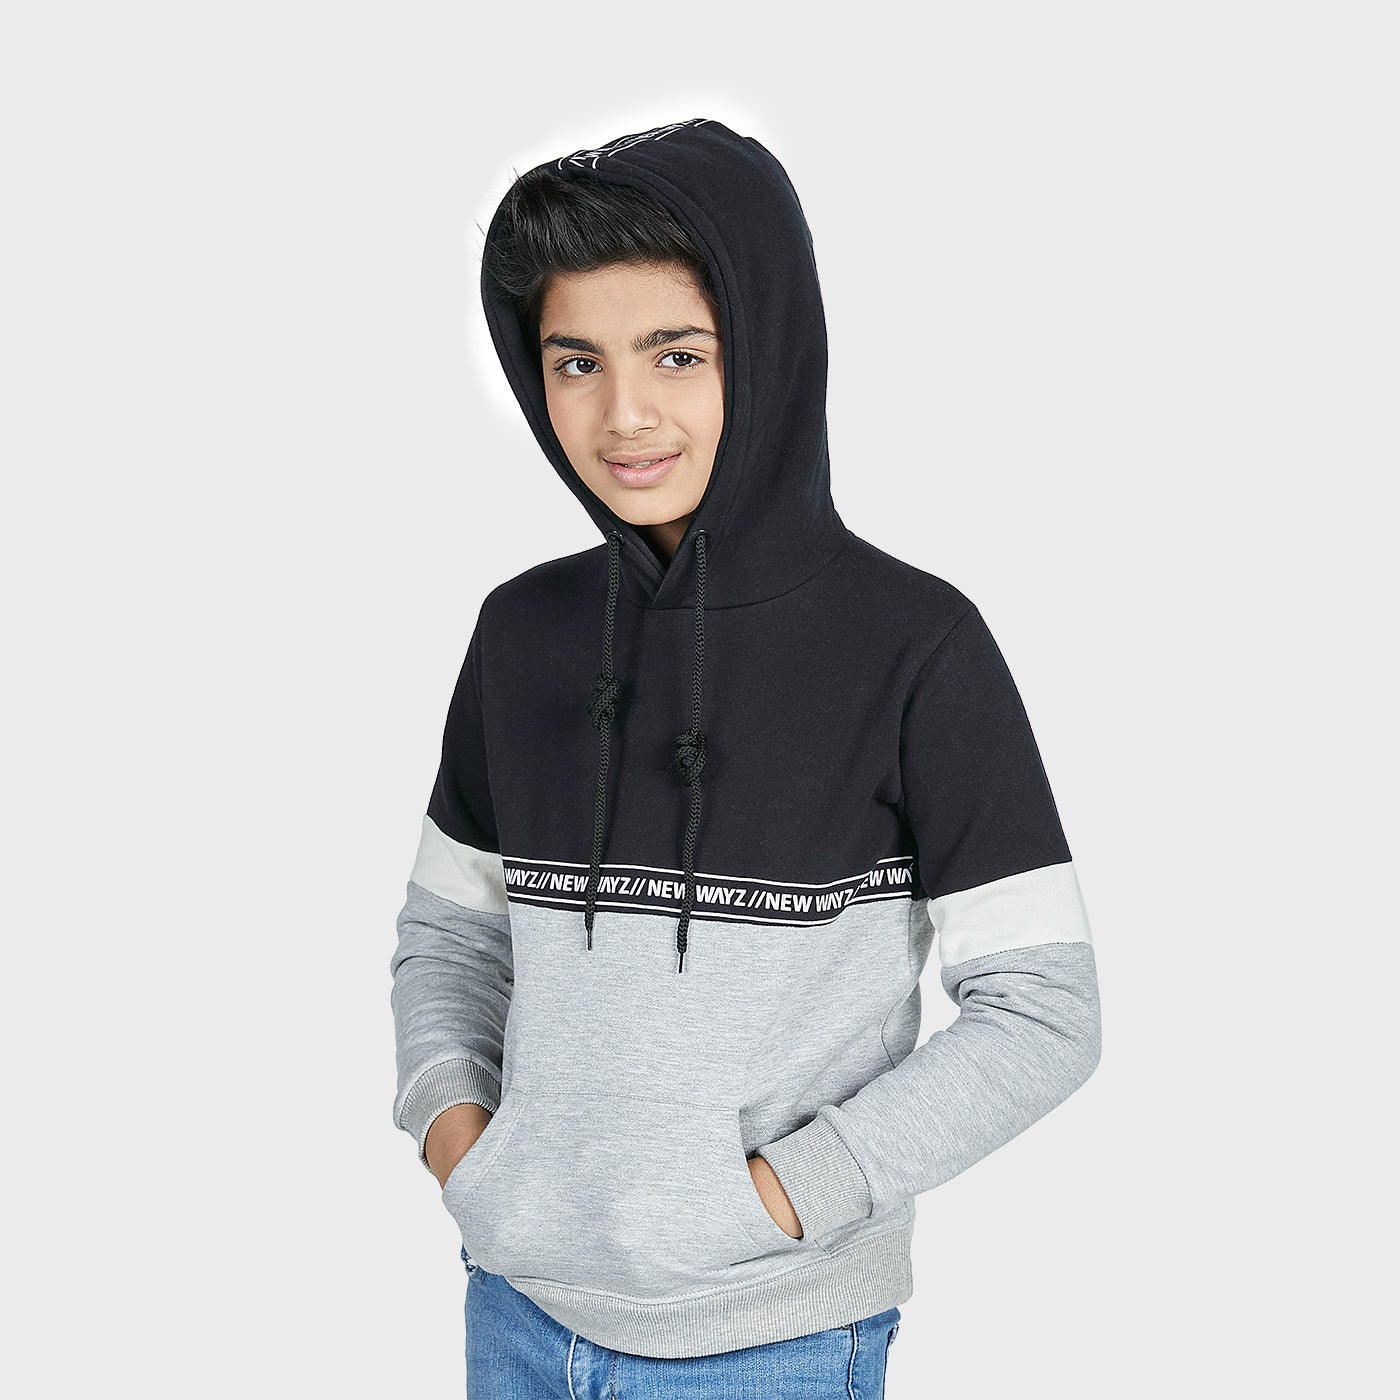 Boys hoodies price in Pakistan